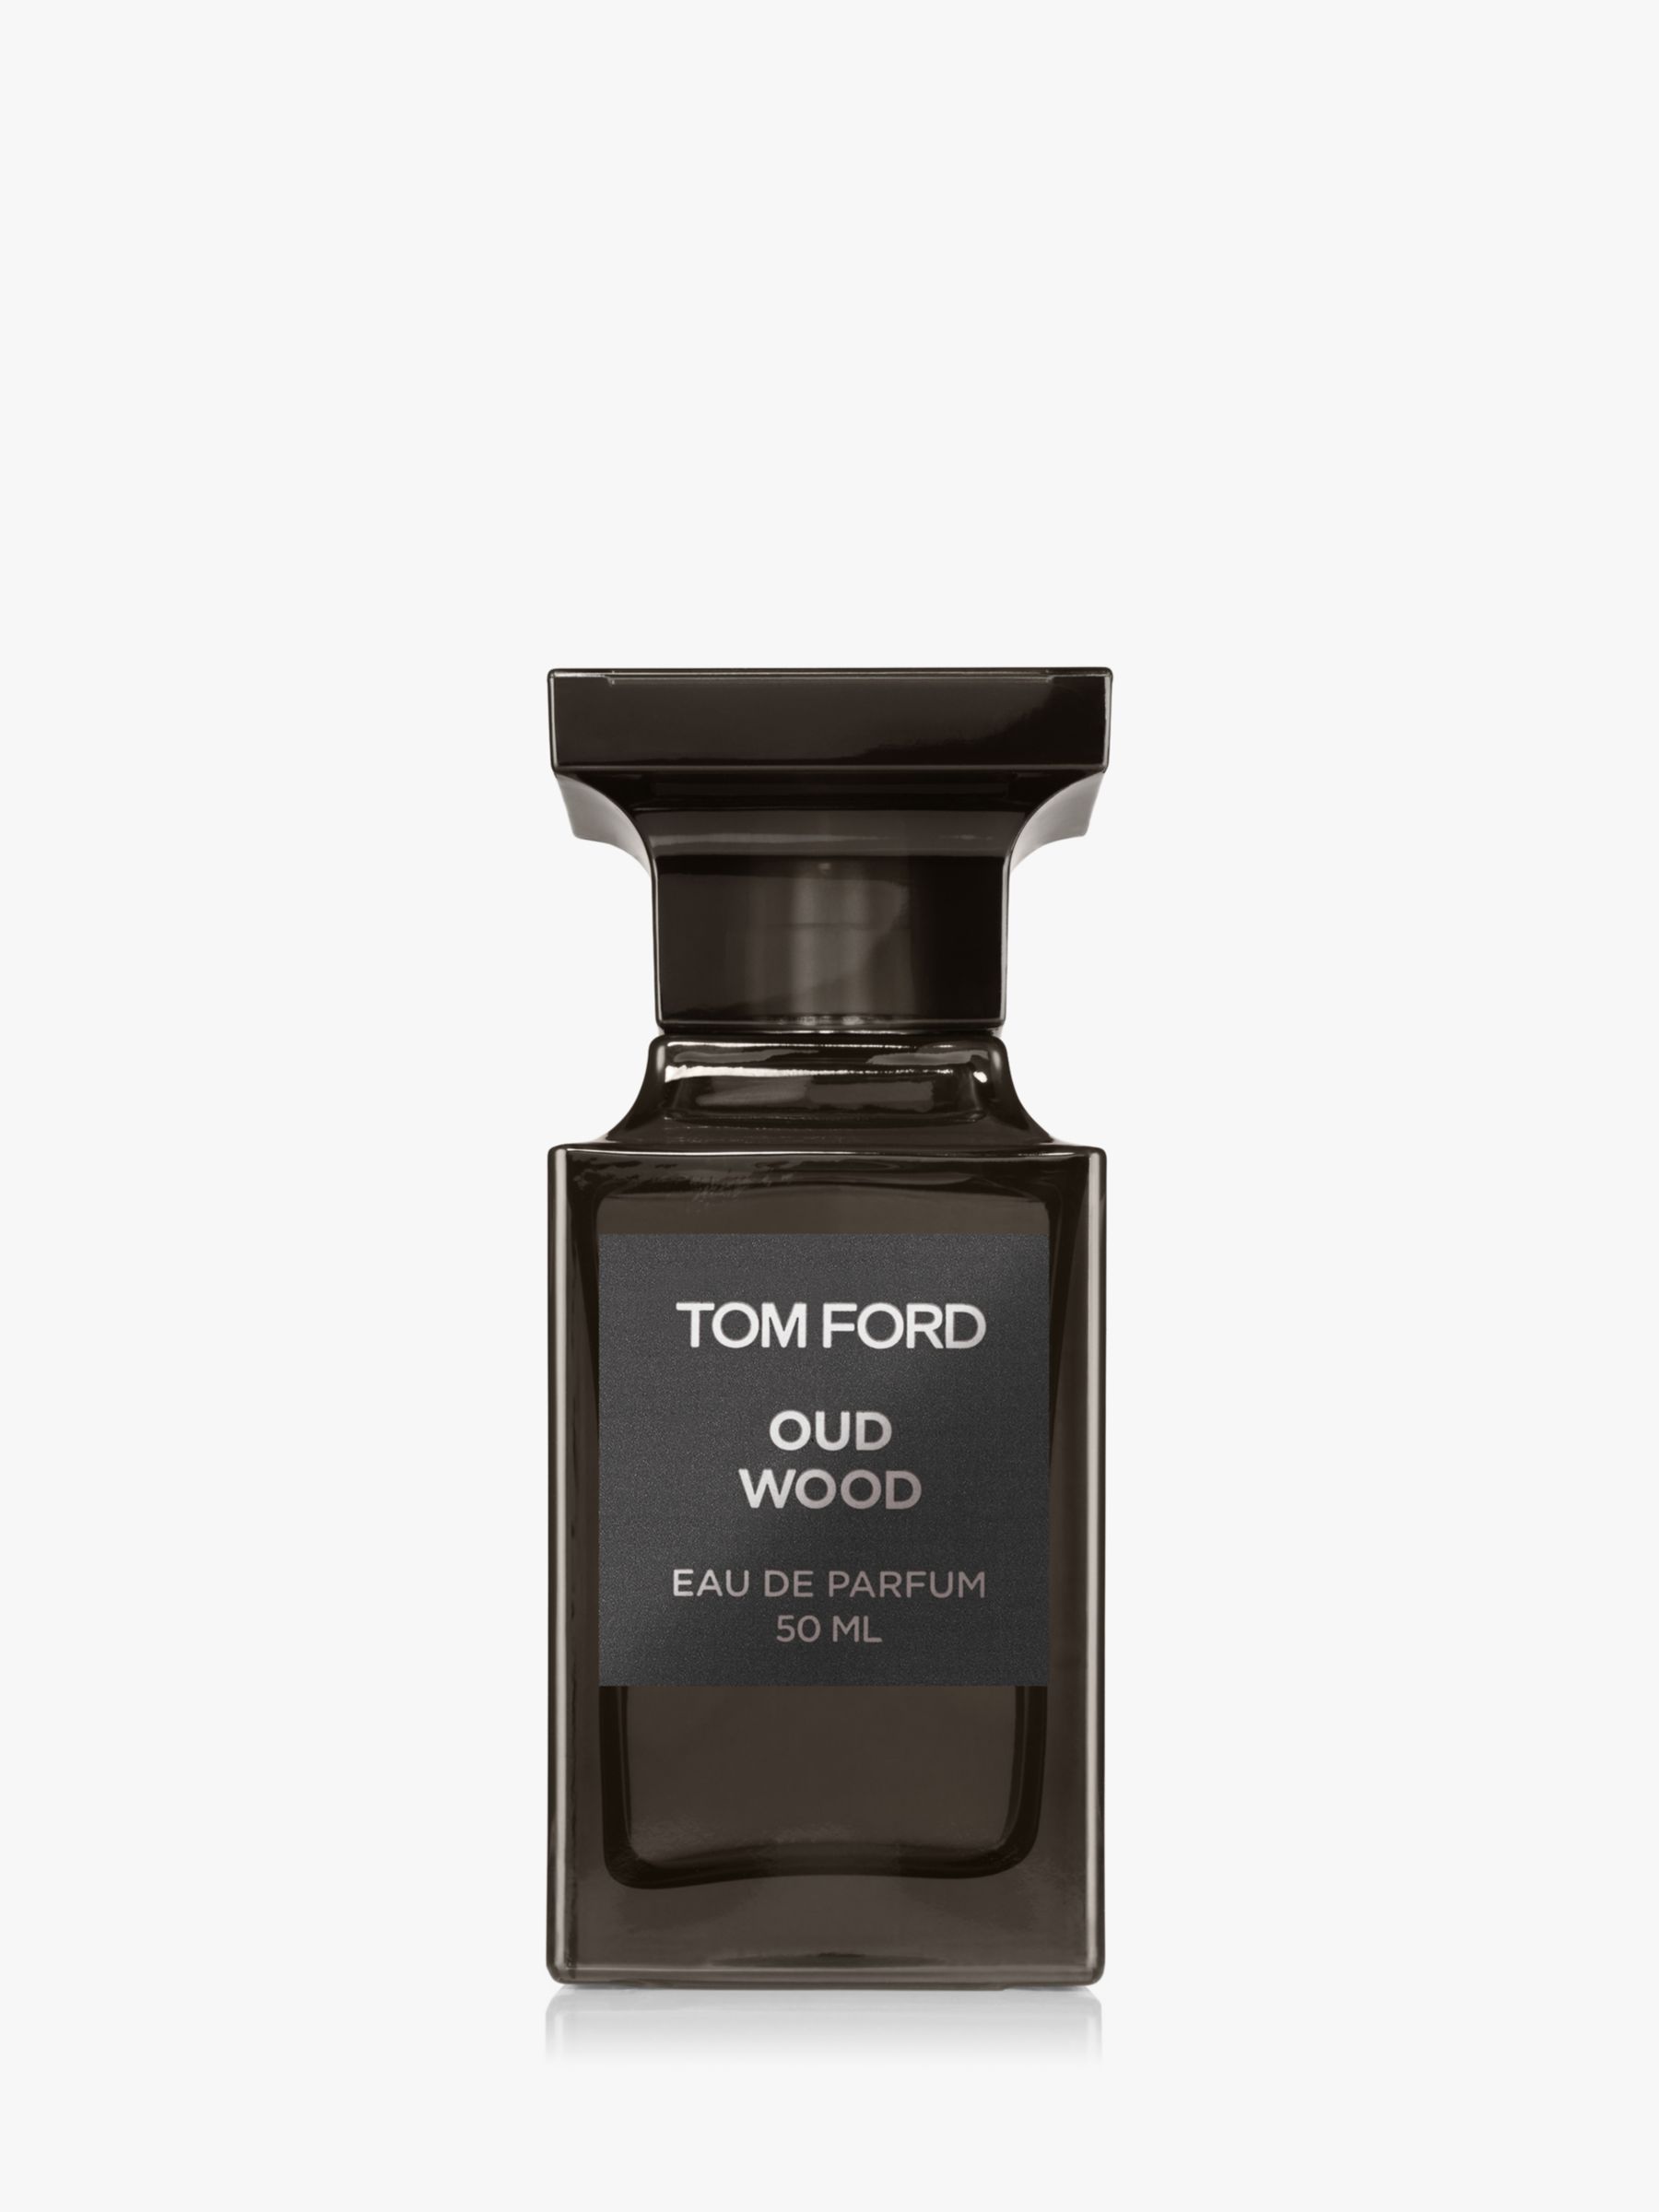 TOM FORD Private Blend Oud Wood Eau De Parfum, 50ml at John Lewis ...